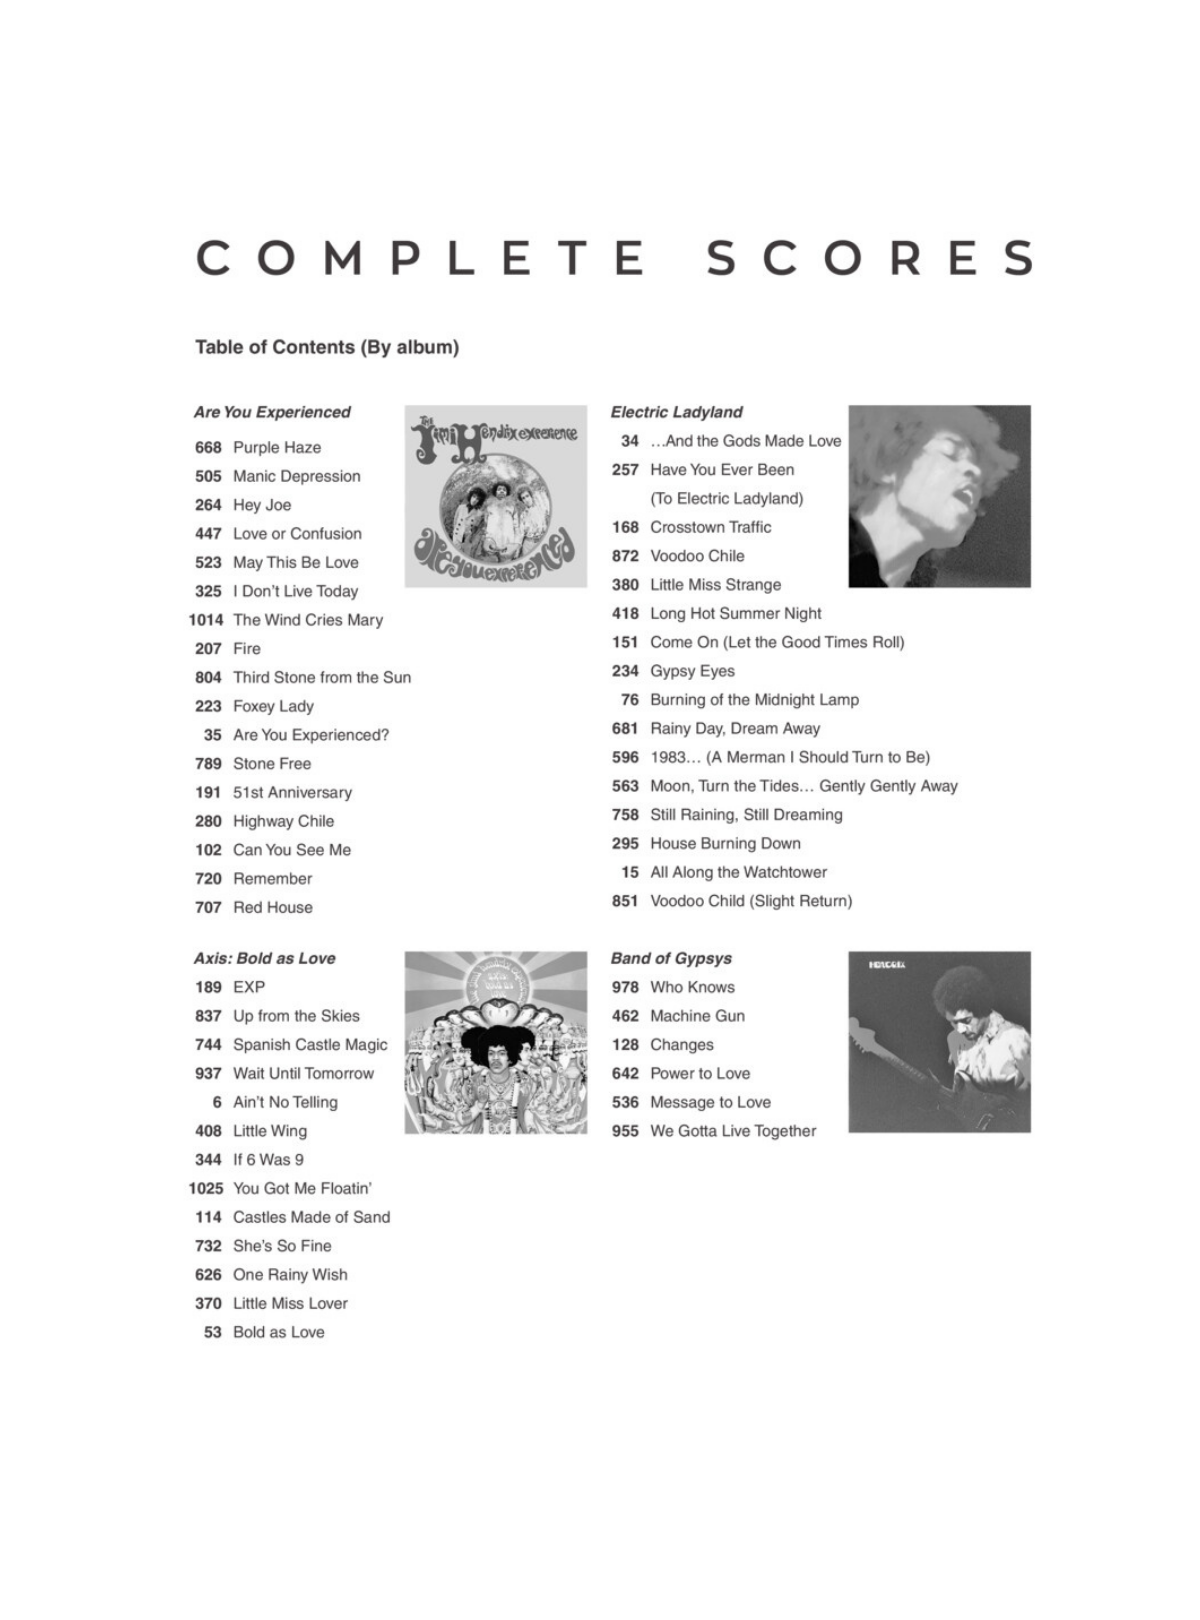 Jimi Hendrix: The Complete Scores